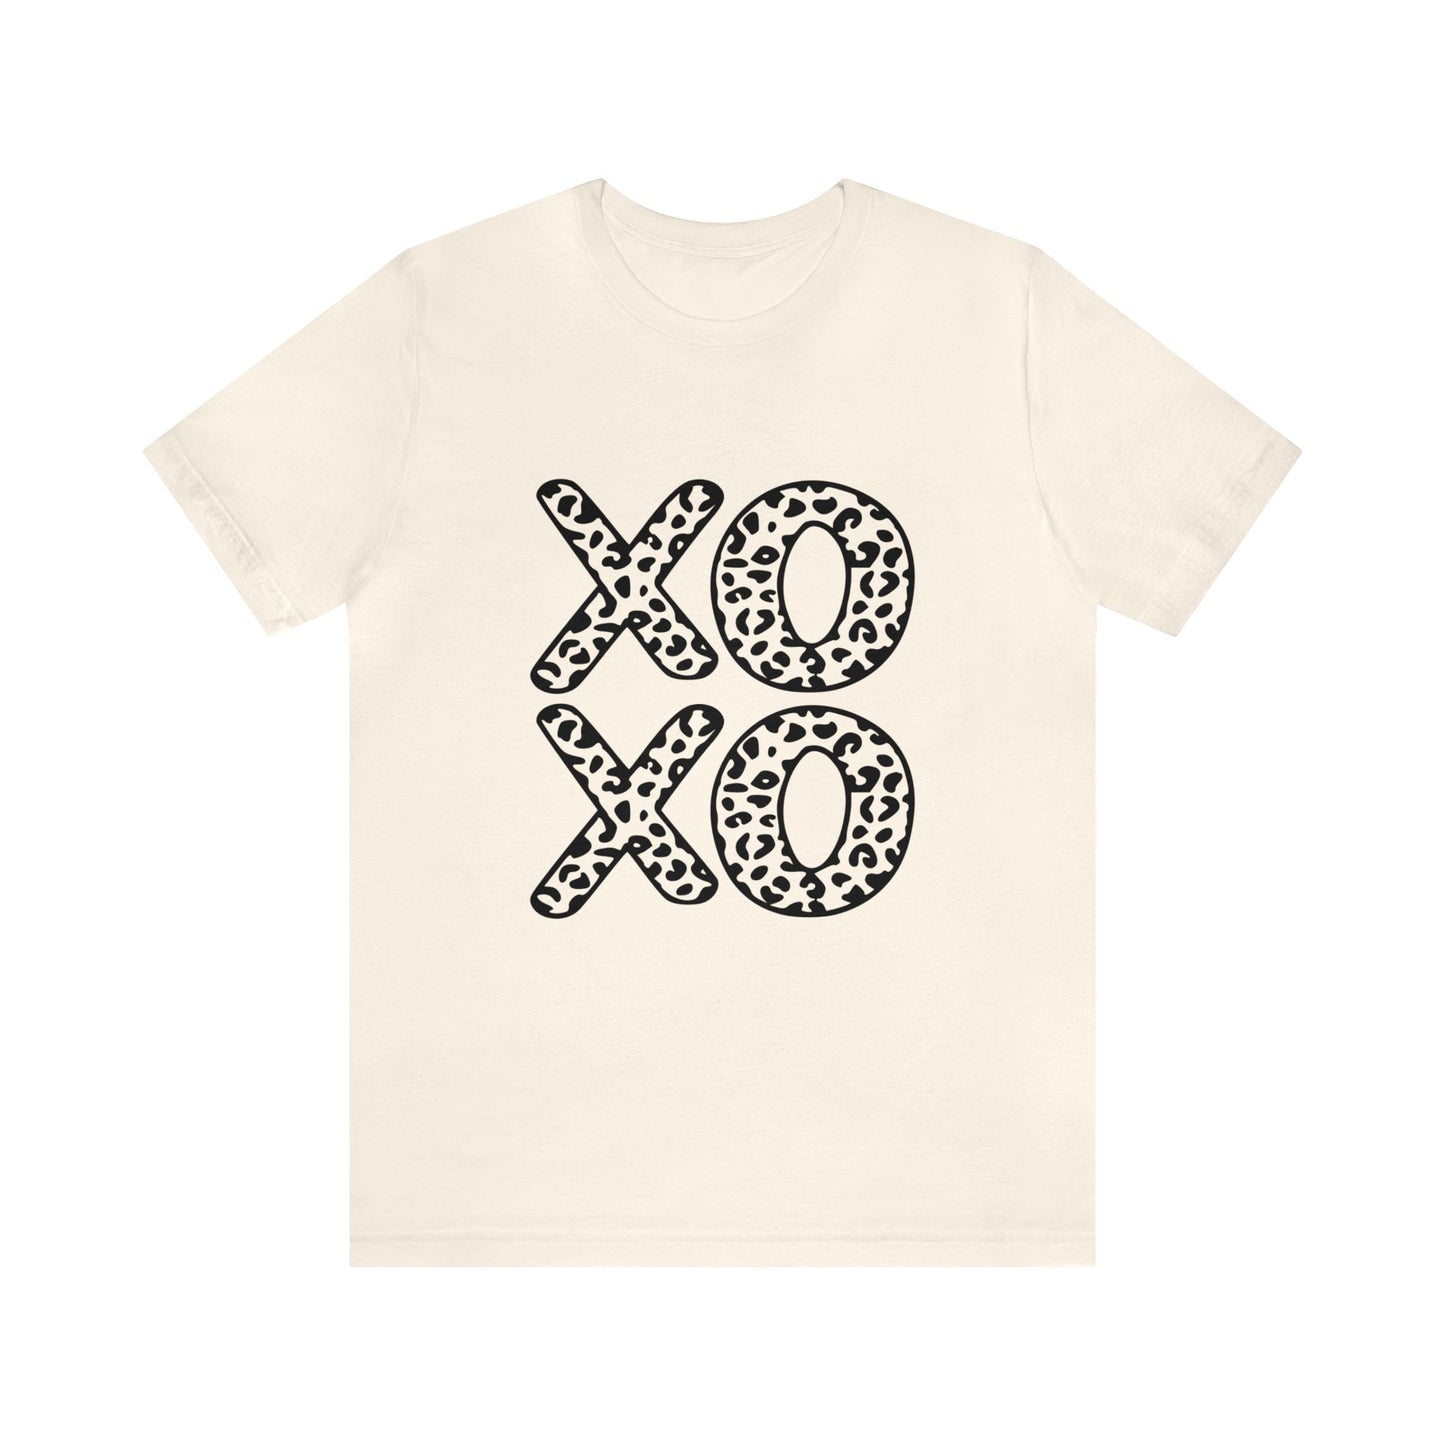 XOXO Women's Tshirt